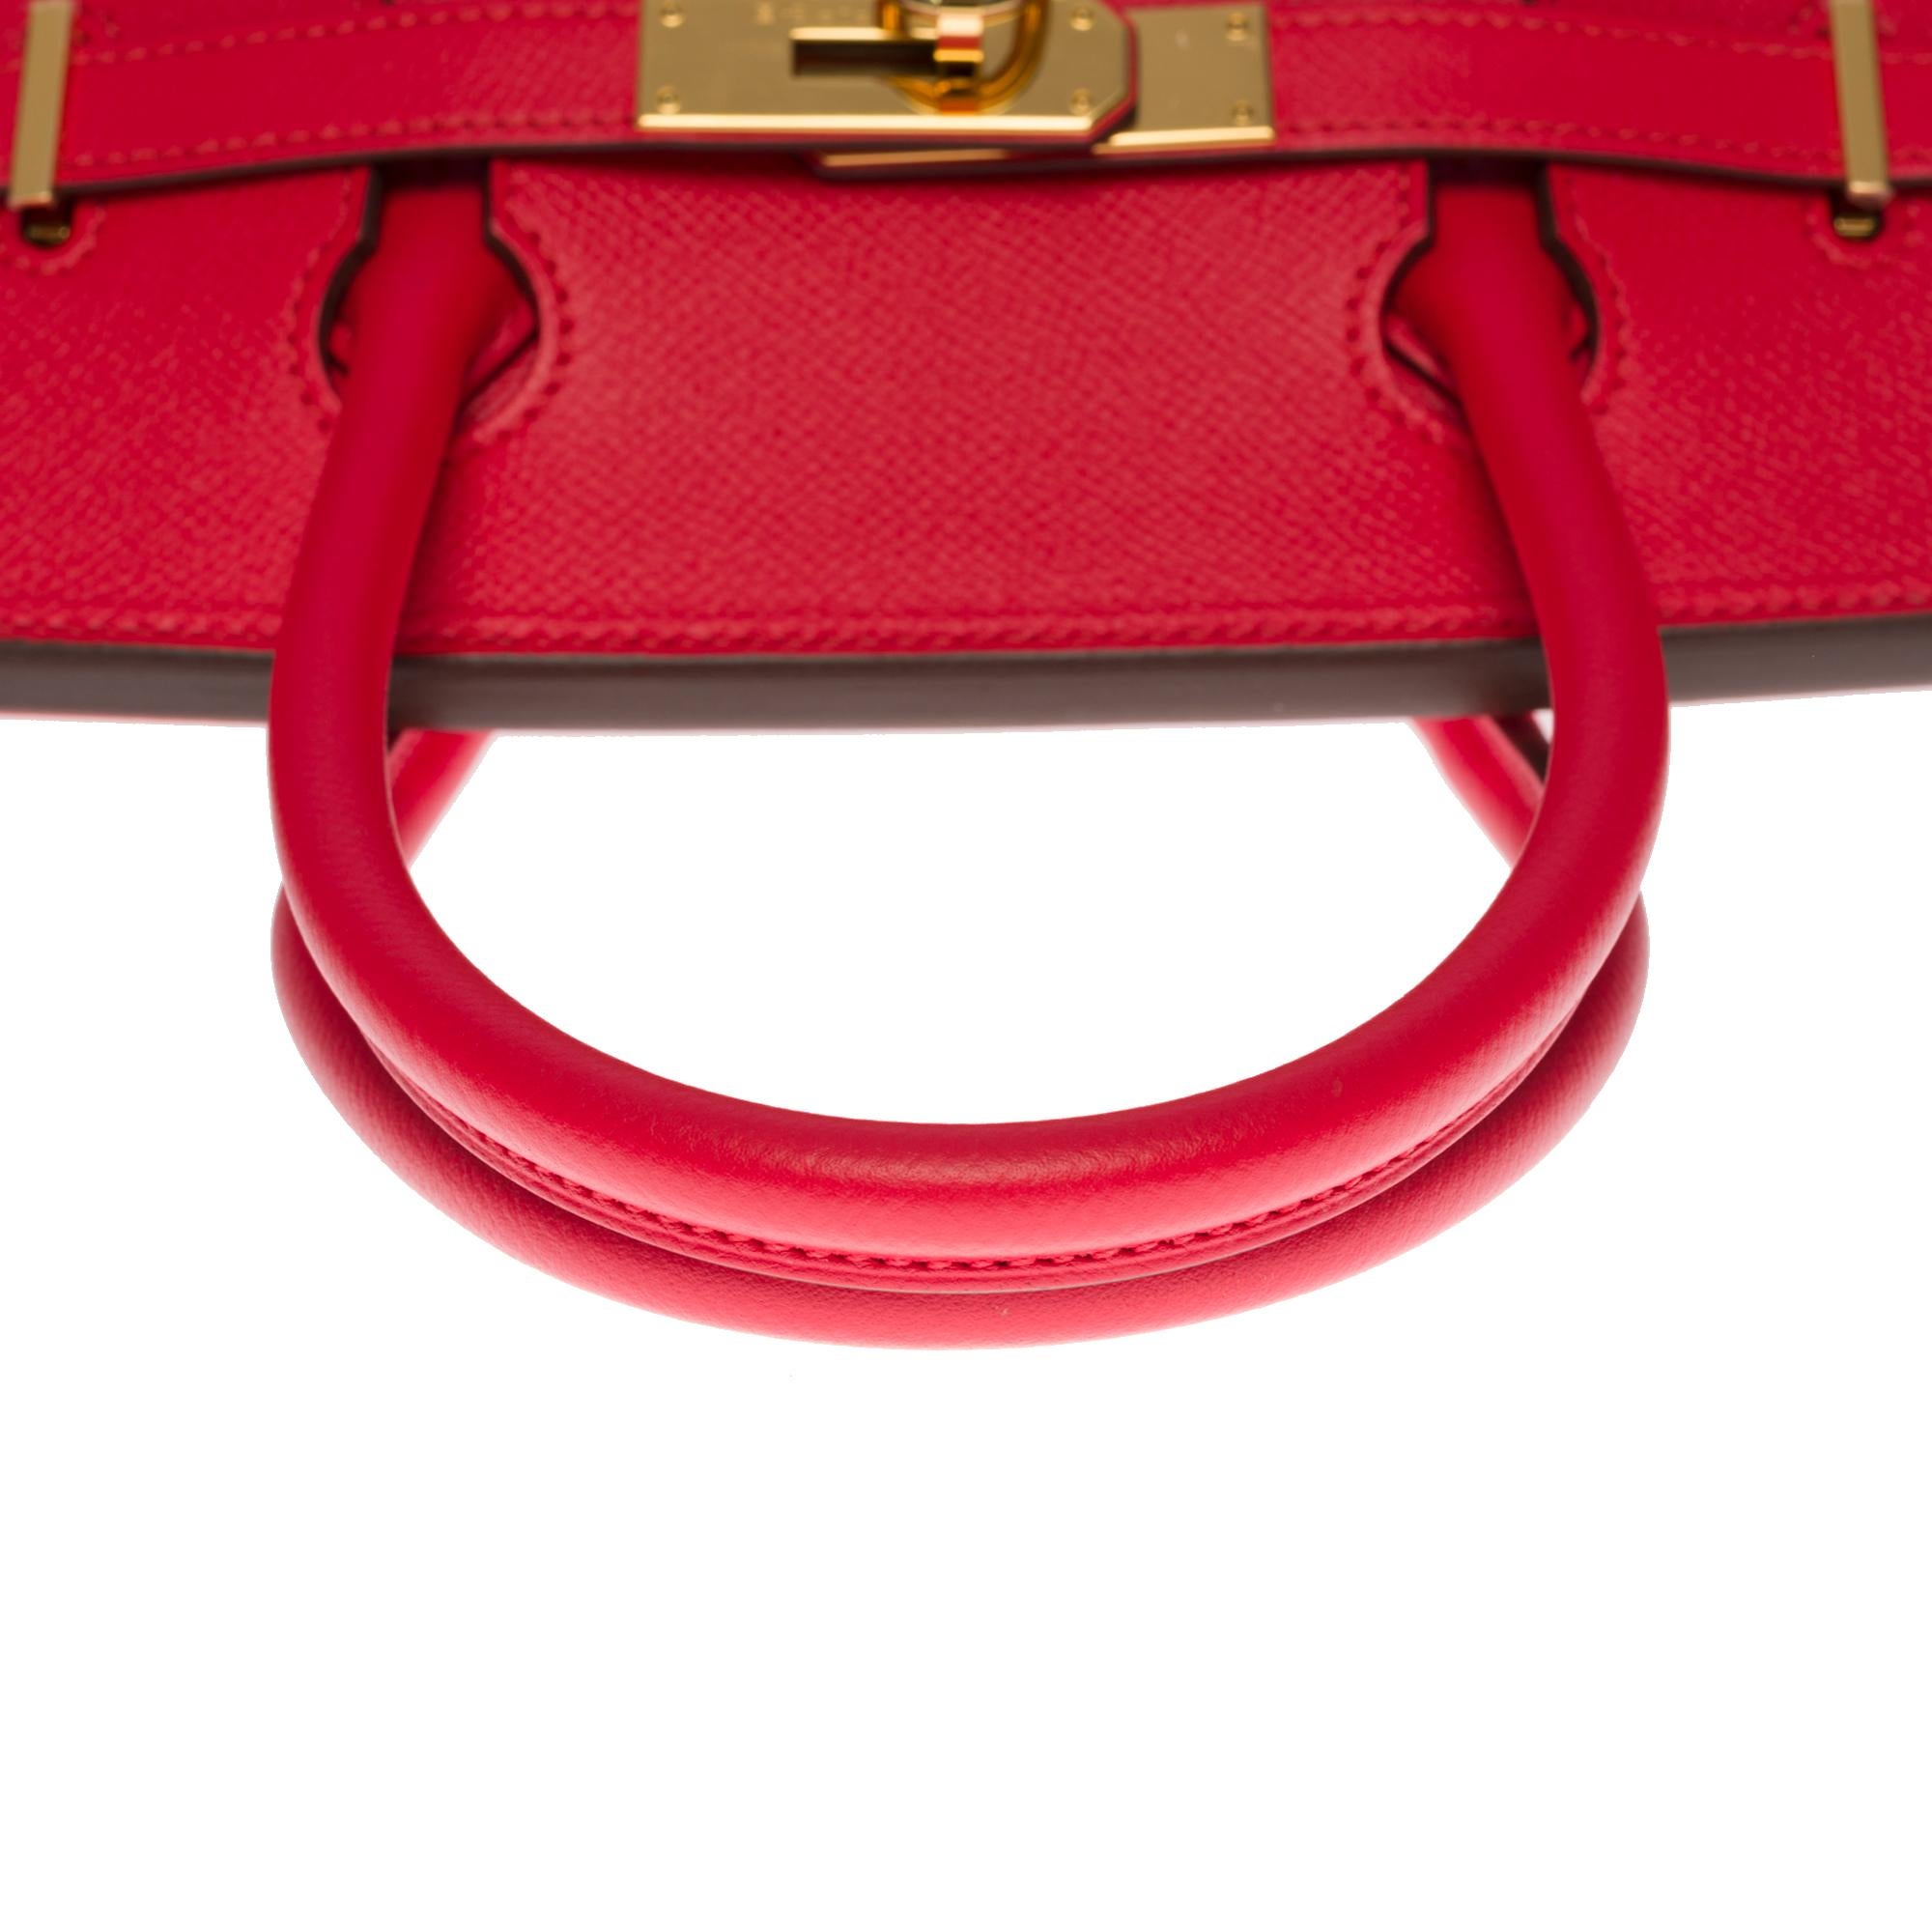 Stunning Hermès Birkin 30 handbag in Rouge de Coeur Epsom leather, GHW For Sale 4